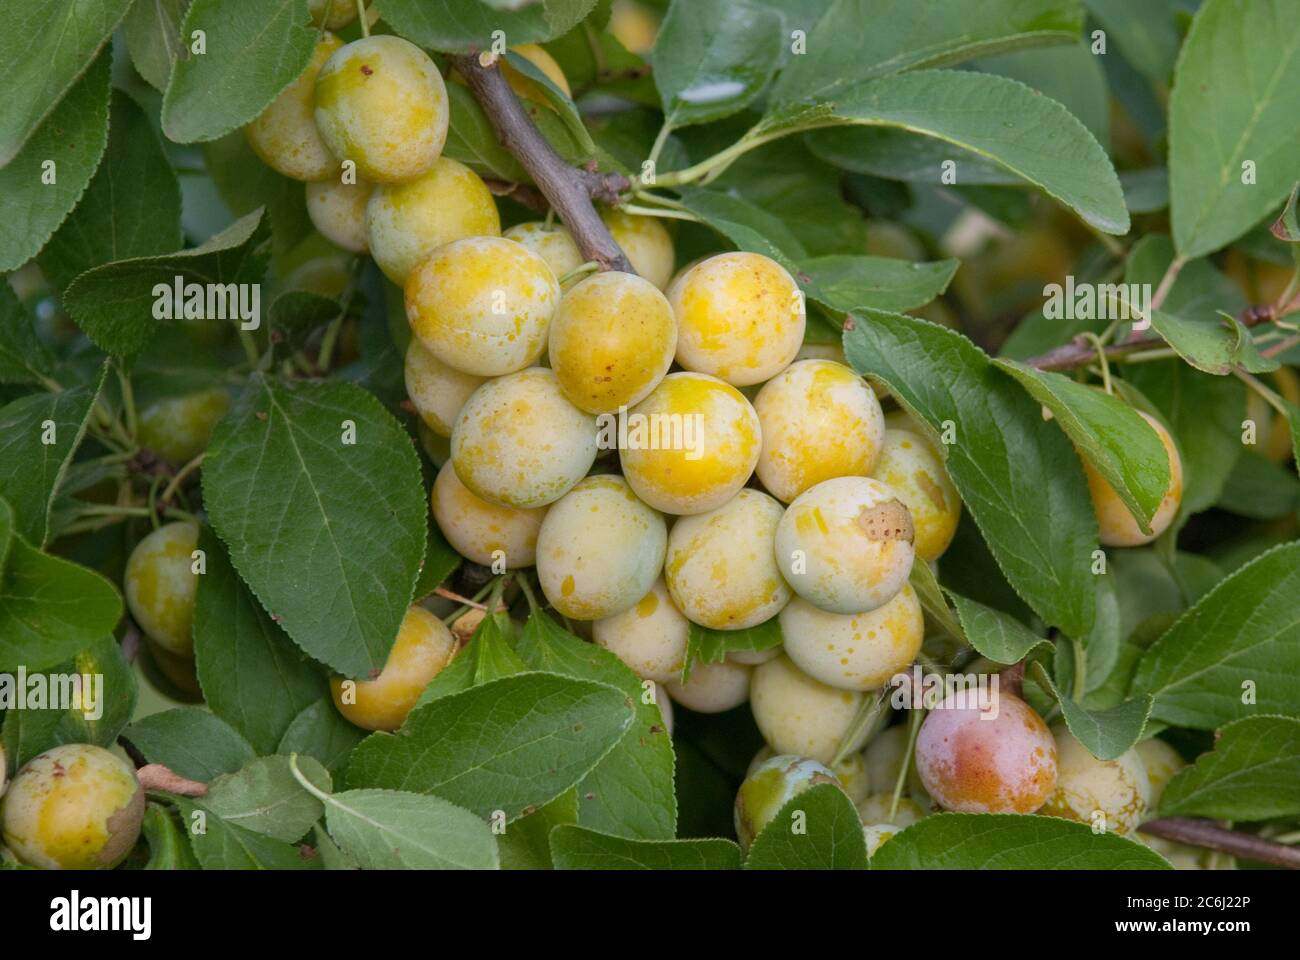 Mirabellen Prunus domestica Nancymirabelle, Mirabelle Prunus domestica Nancy Mirabelle Stock Photo